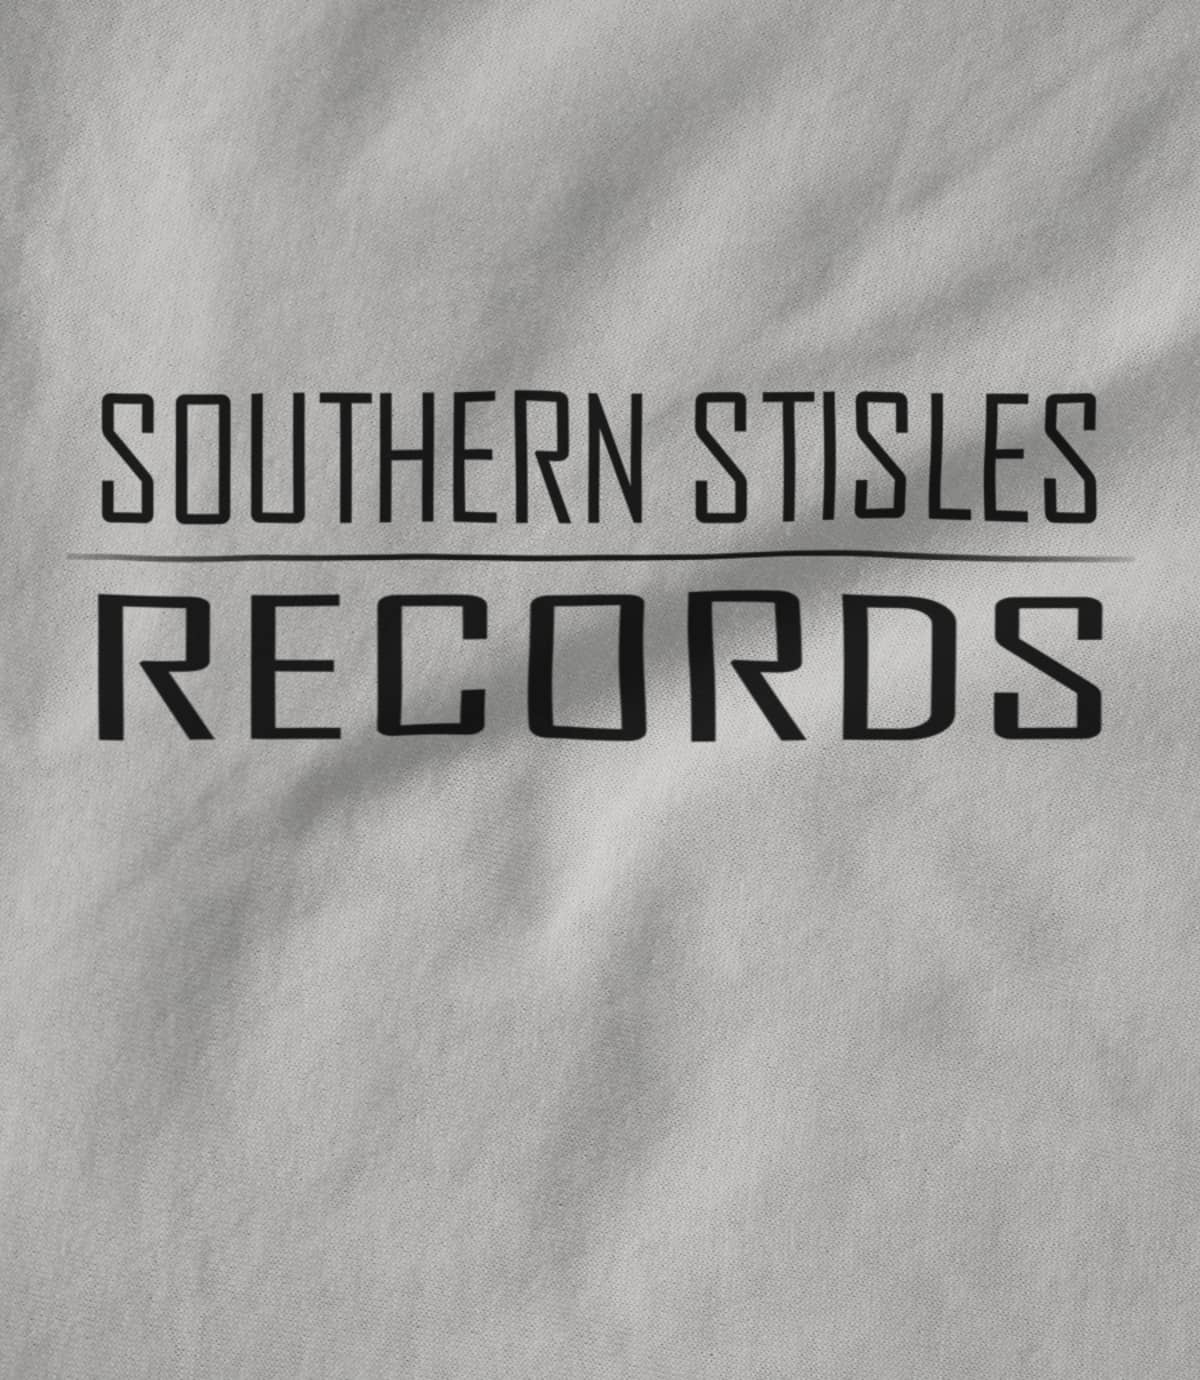 Southern Stisles Records